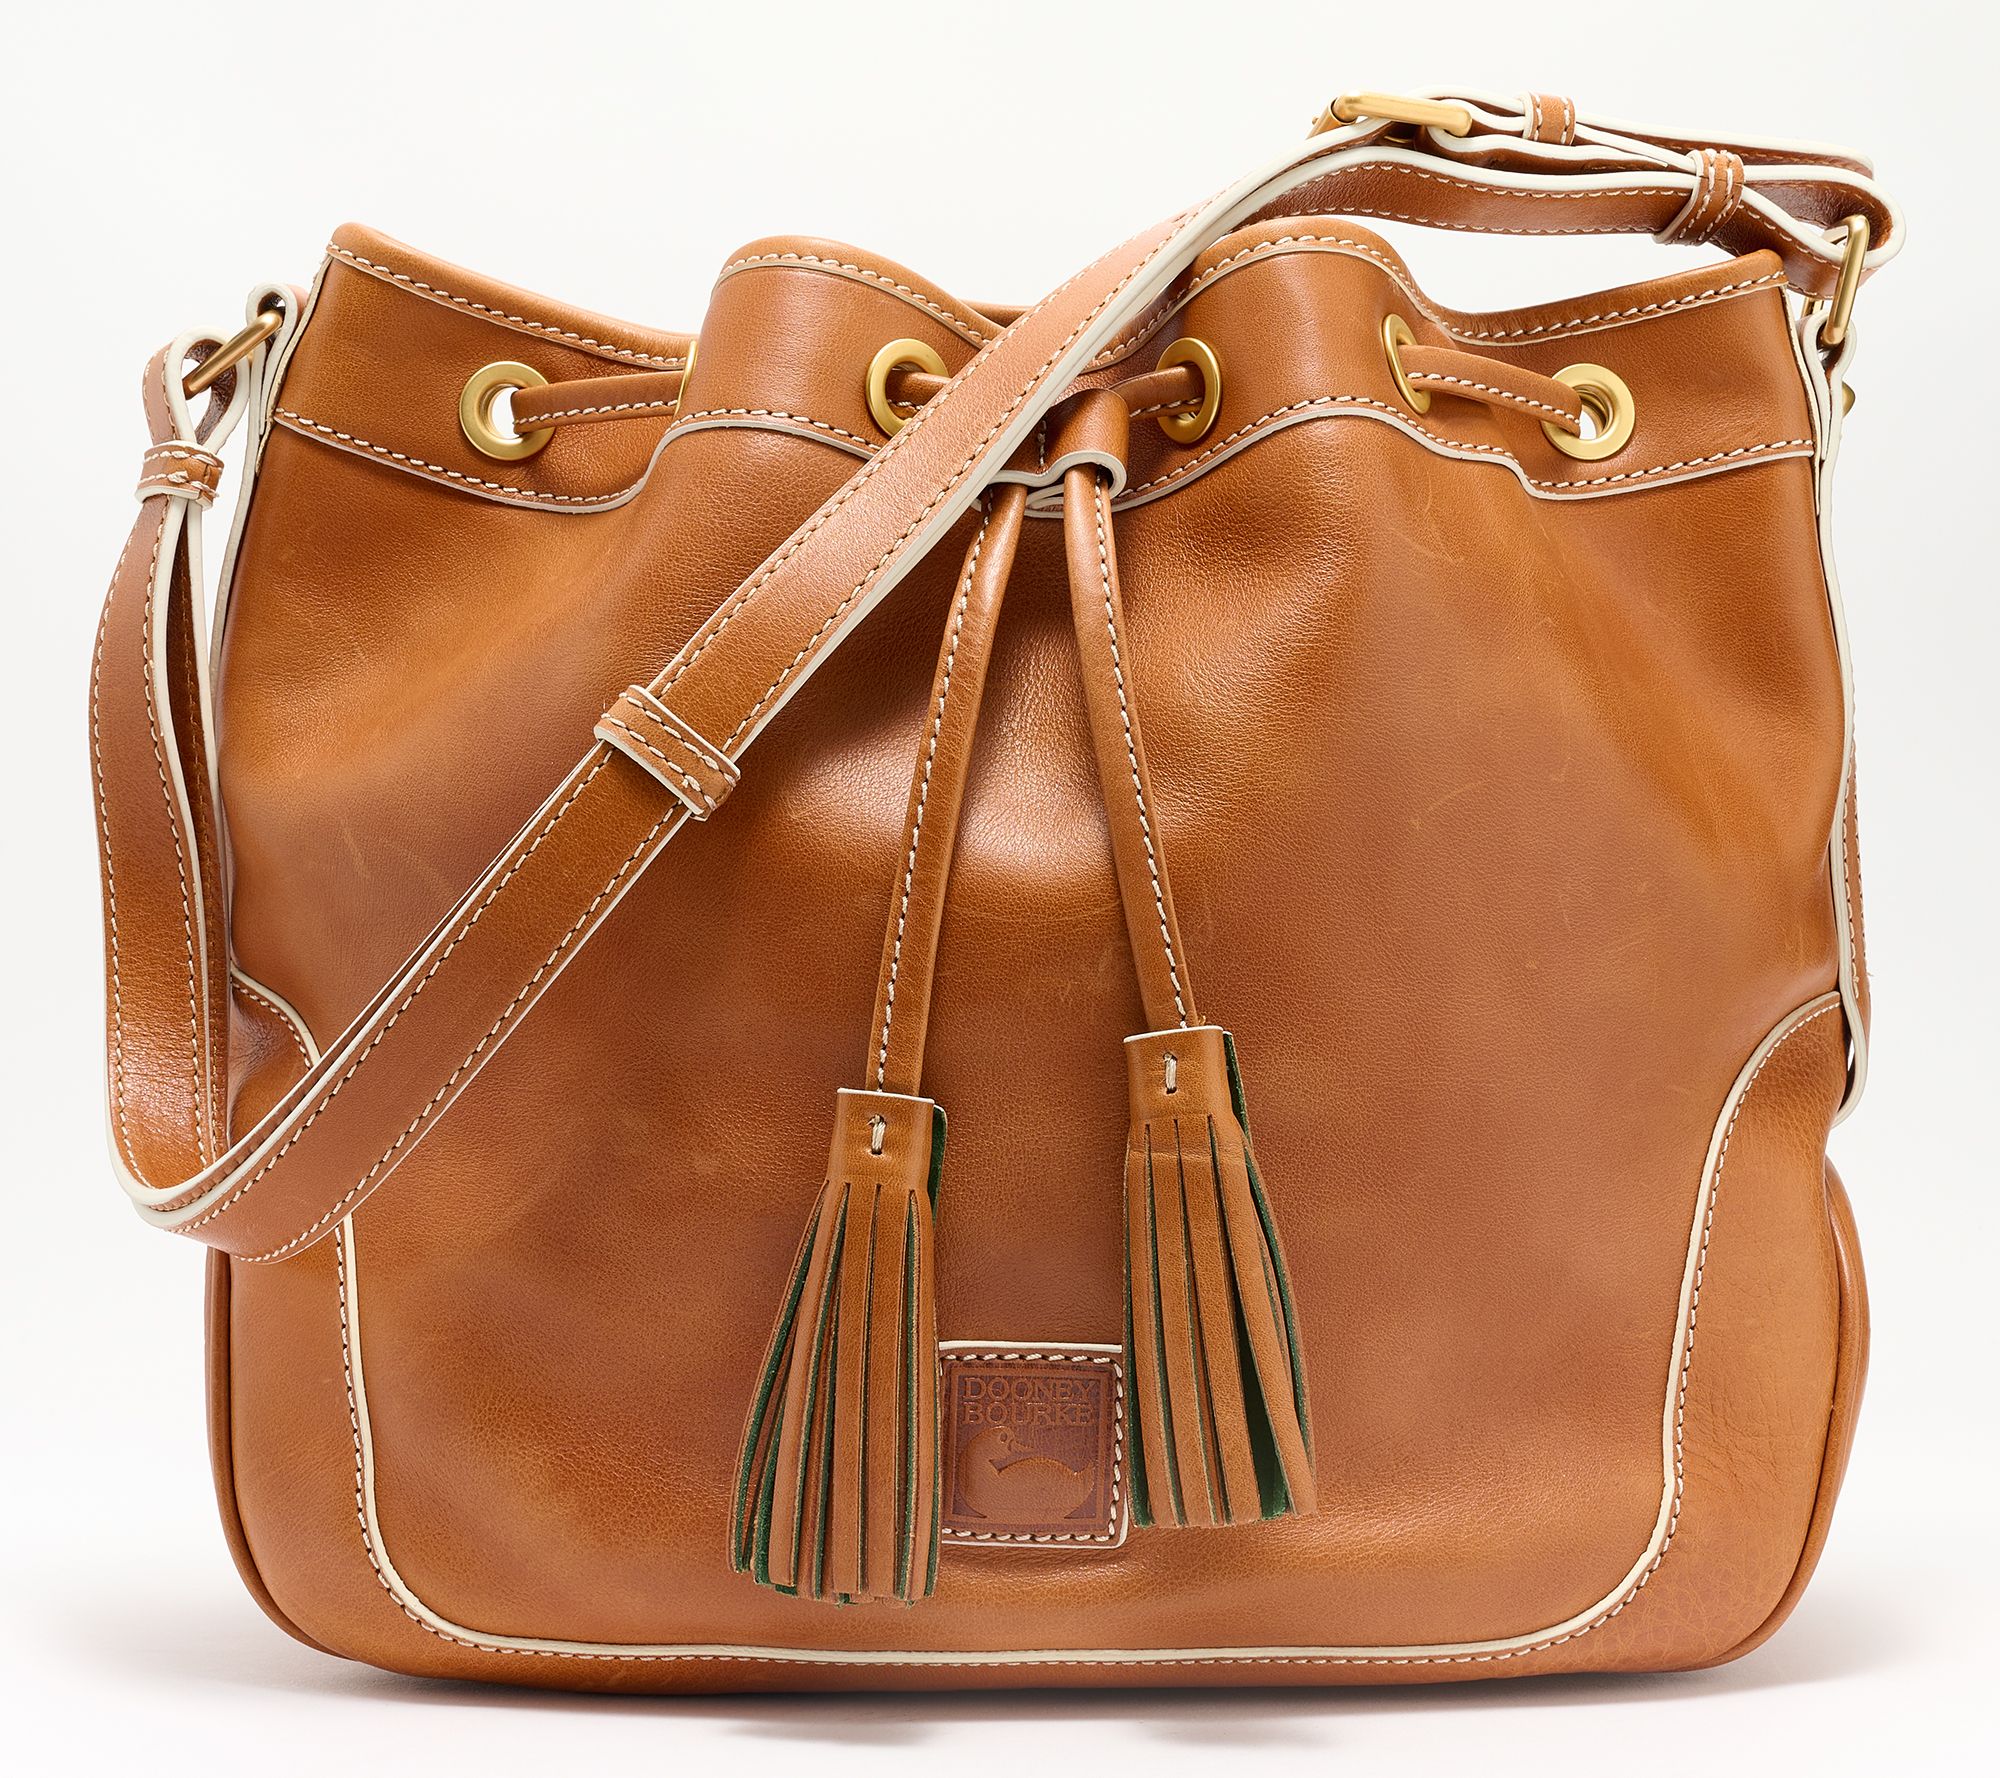 Dooney & Bourke - Shoulder Bags - QVC.com